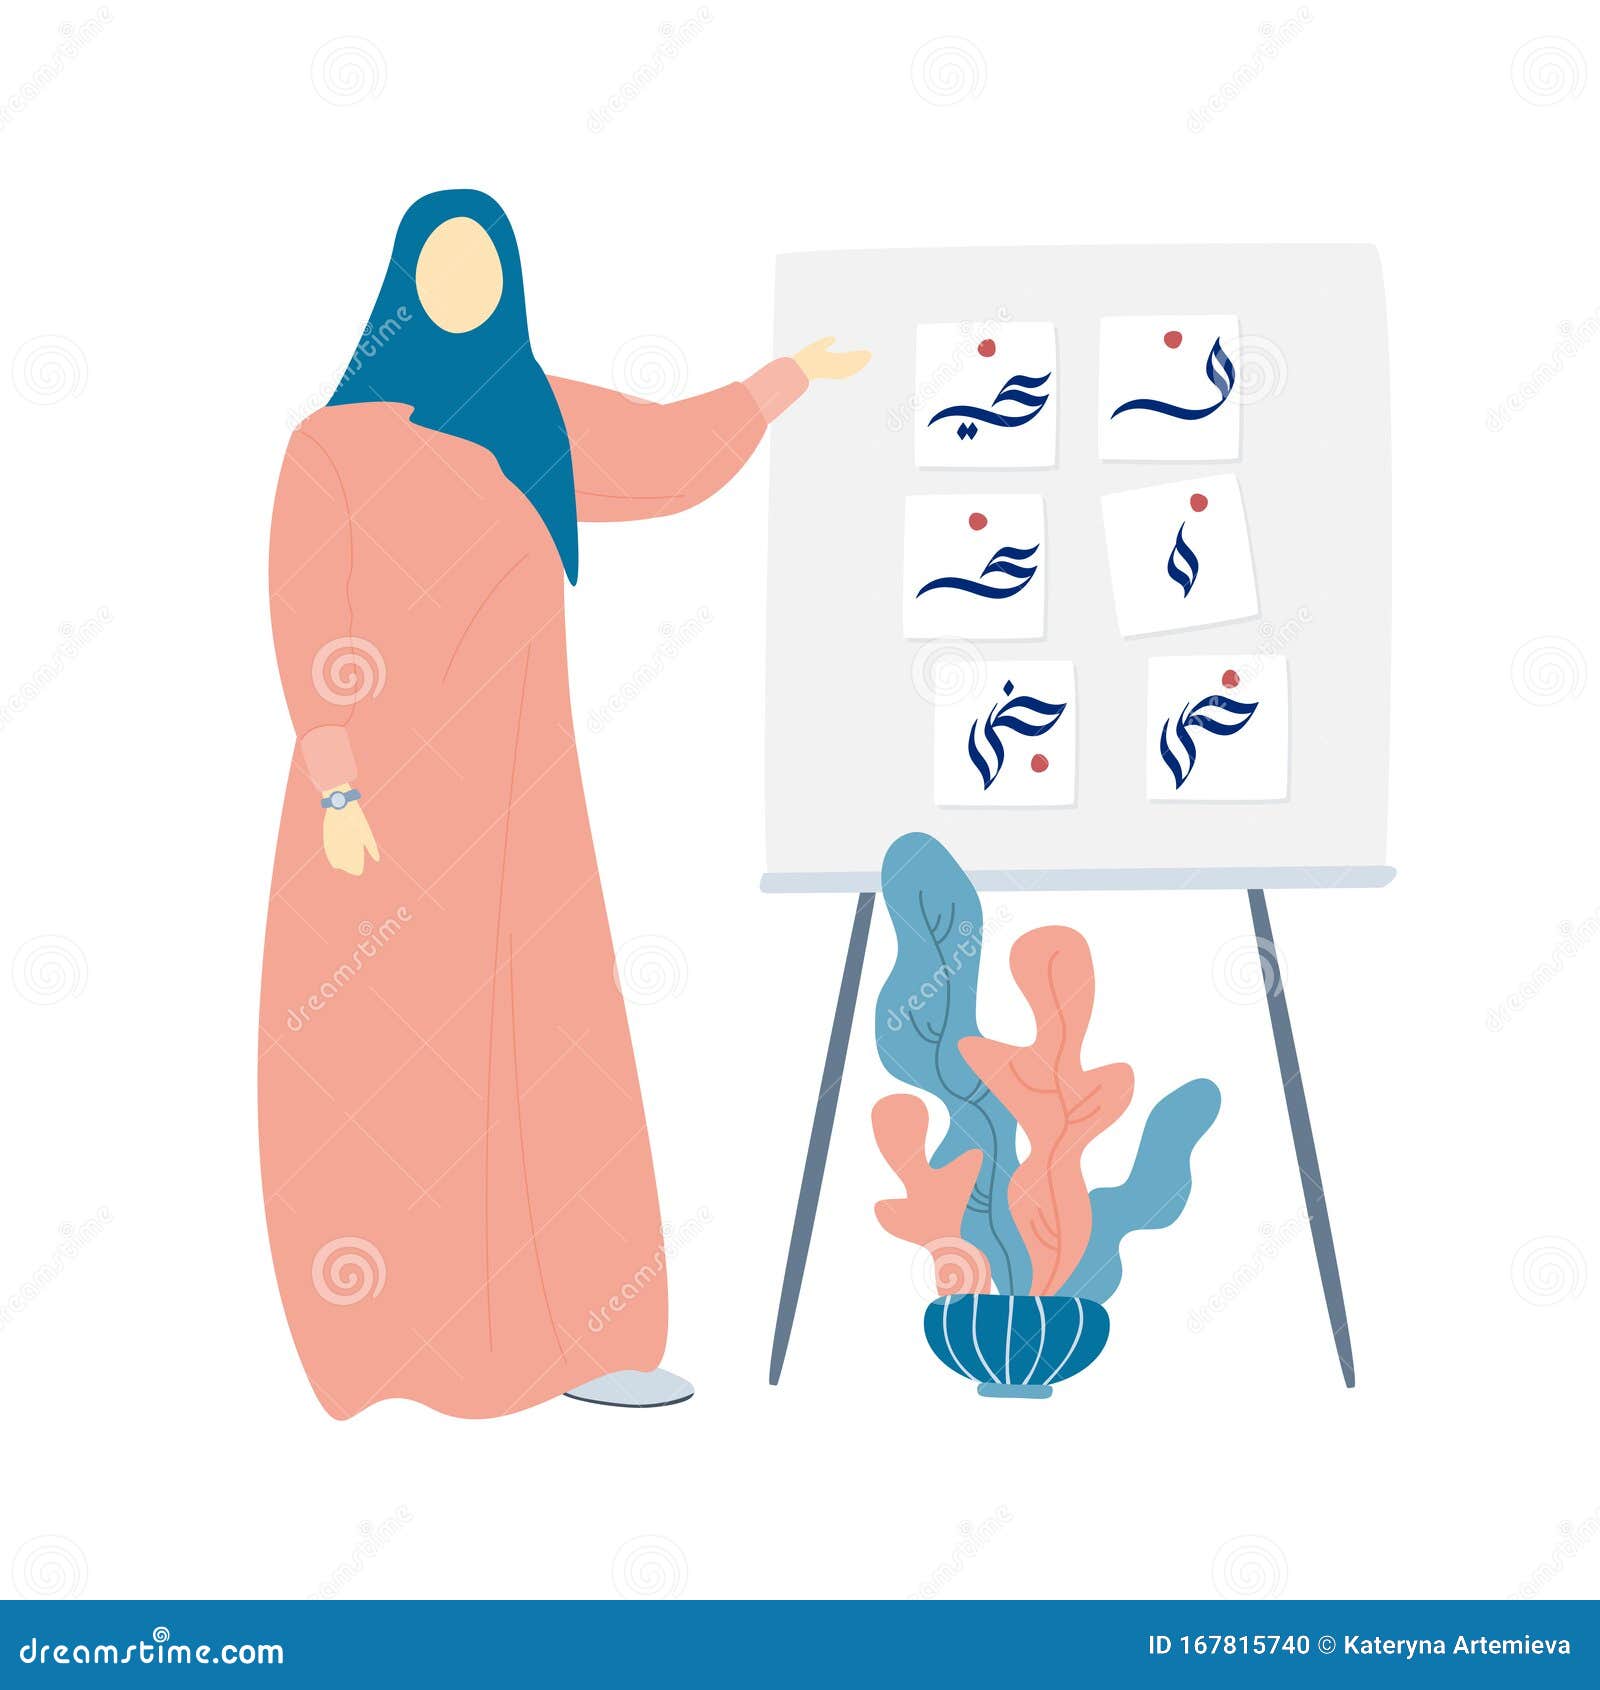 Muslim Woman Teacher. Learning The Arabic Alphabet Stock Illustration